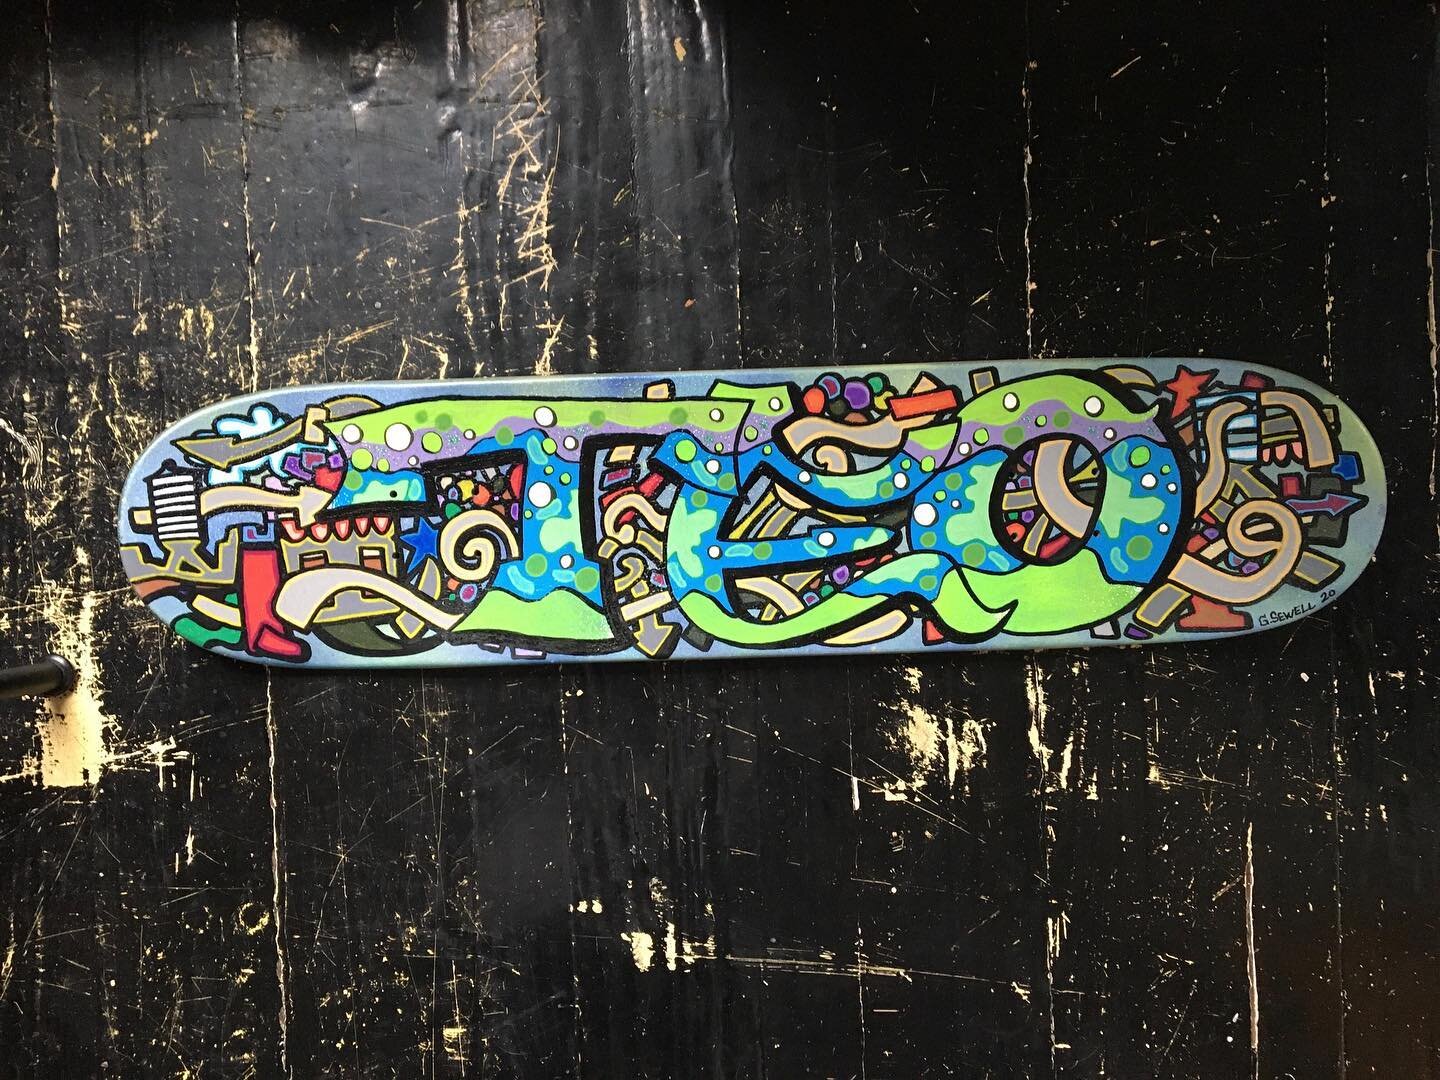 Latest custom deck intended as wall art, makes a great present
.
.
#skateboardart #nycartist #custommade #yournamehere #grafittiart #watertowers #birthdaygifts #customart #grafitti #posca #georgesewell #georgesewellnyc #explorepage